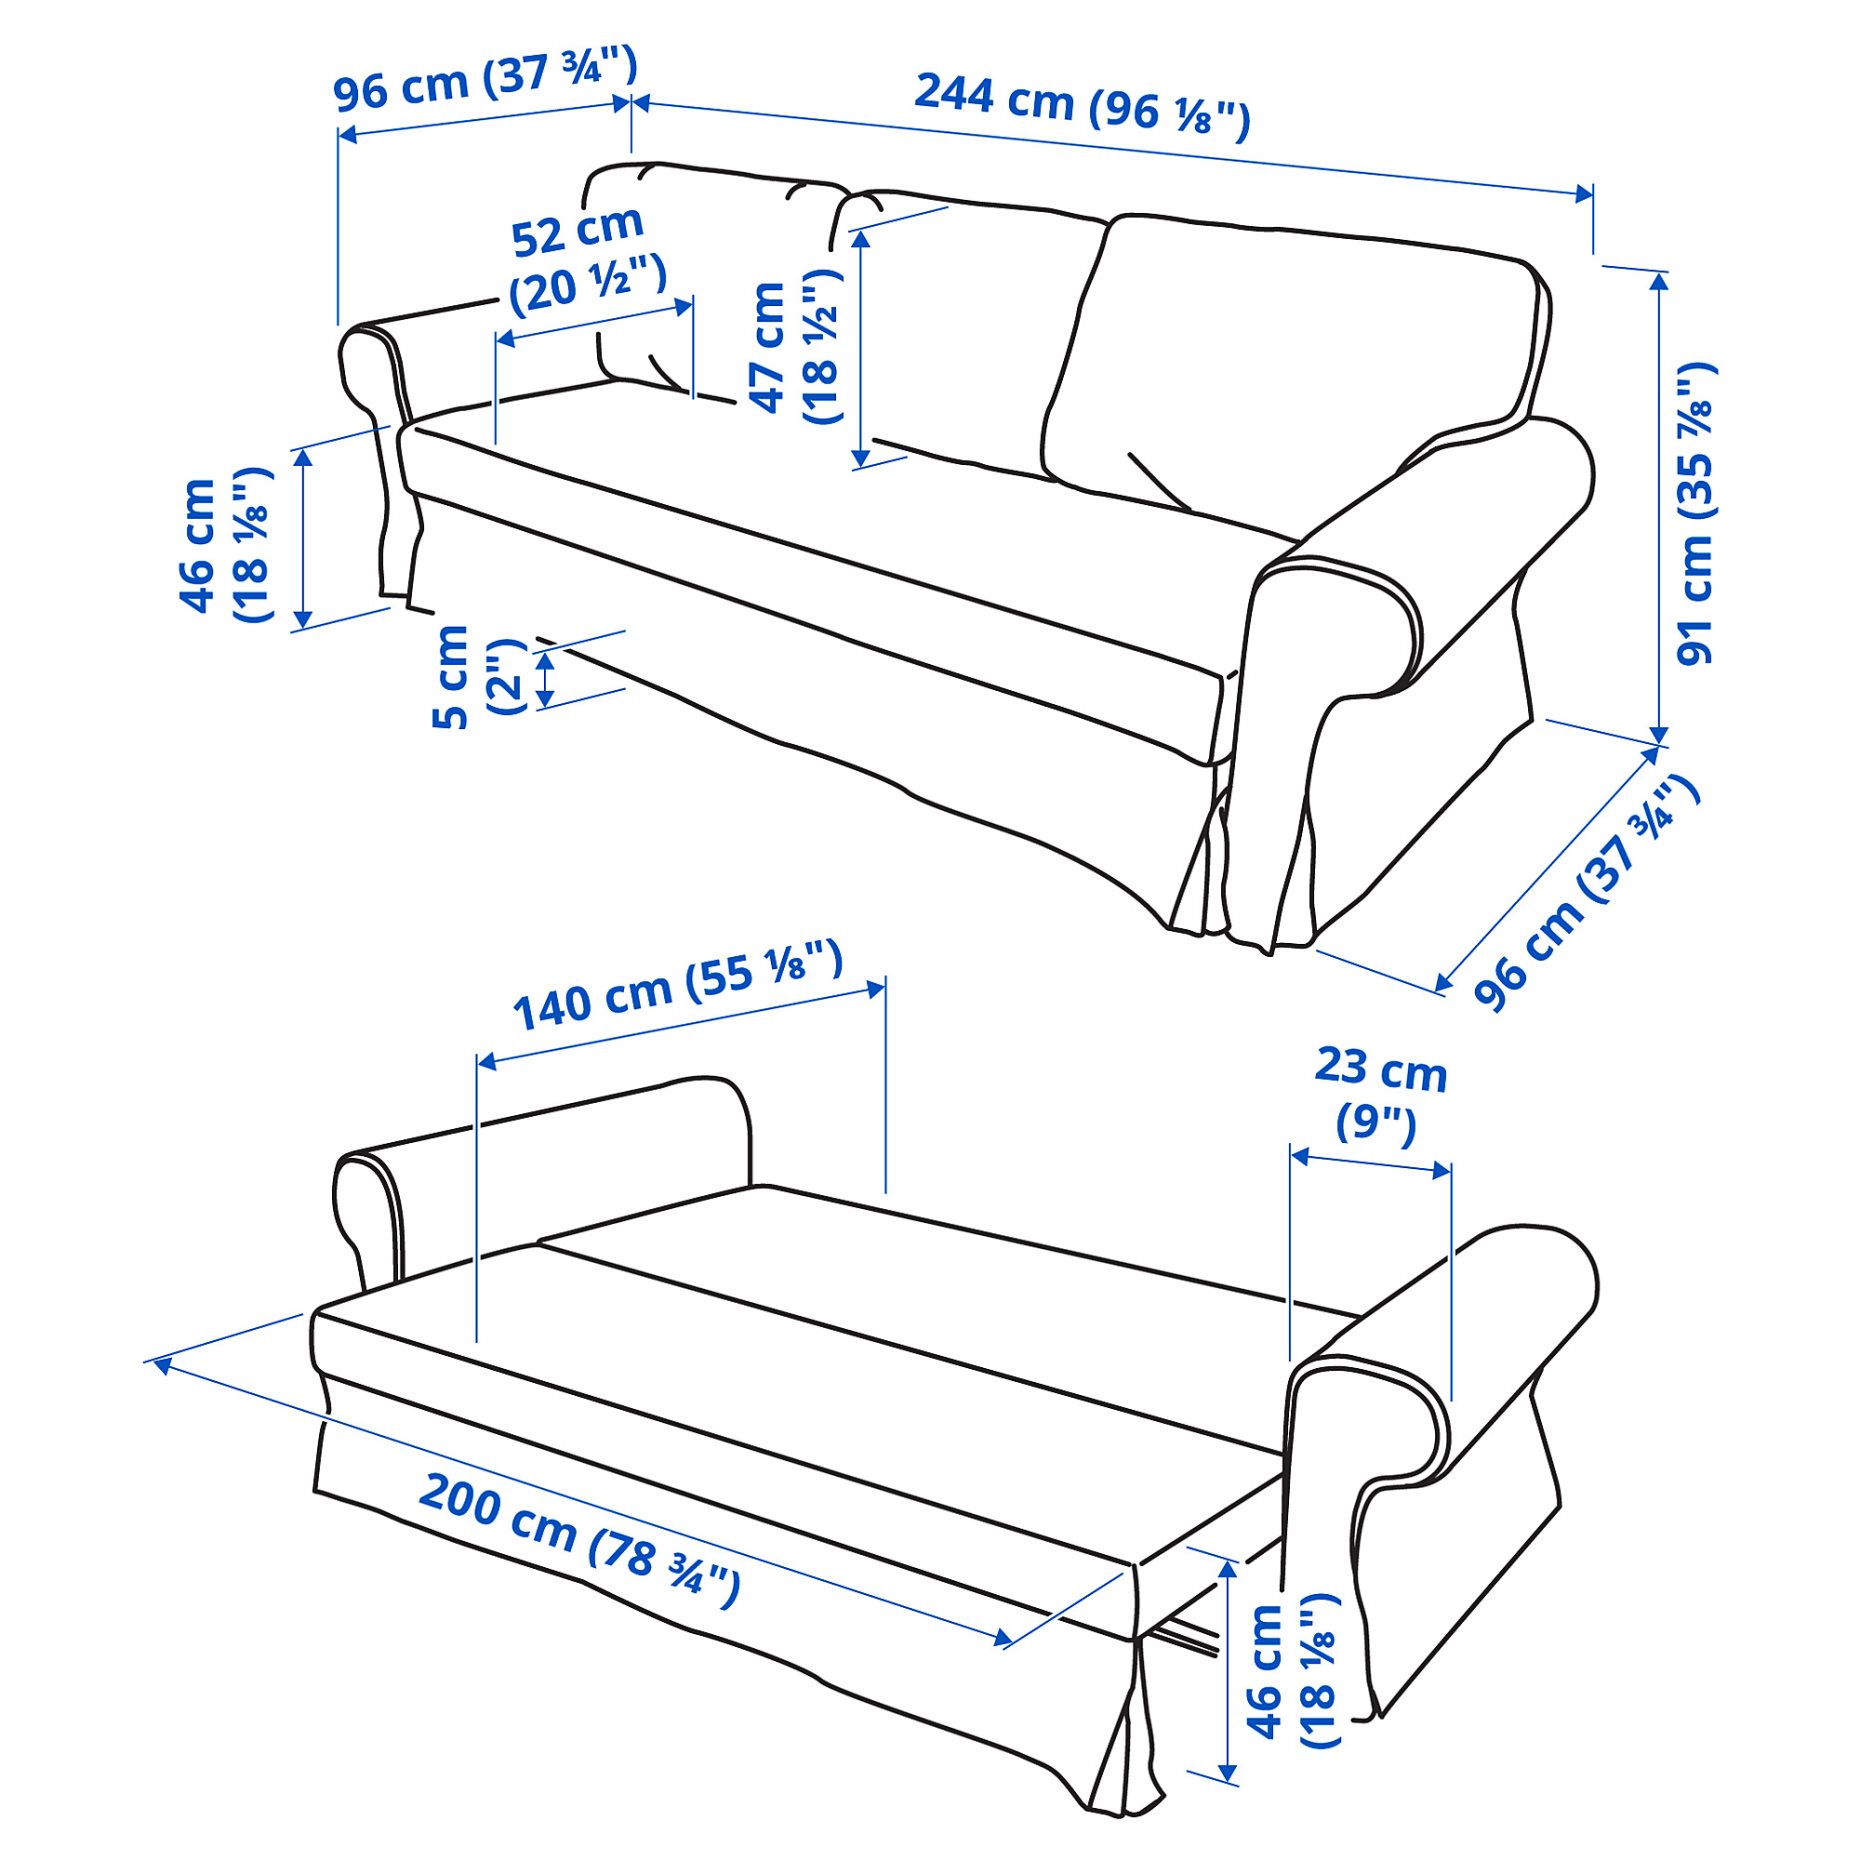 VRETSTORP, τριθέσιος καναπές-κρεβάτι, 593.201.13